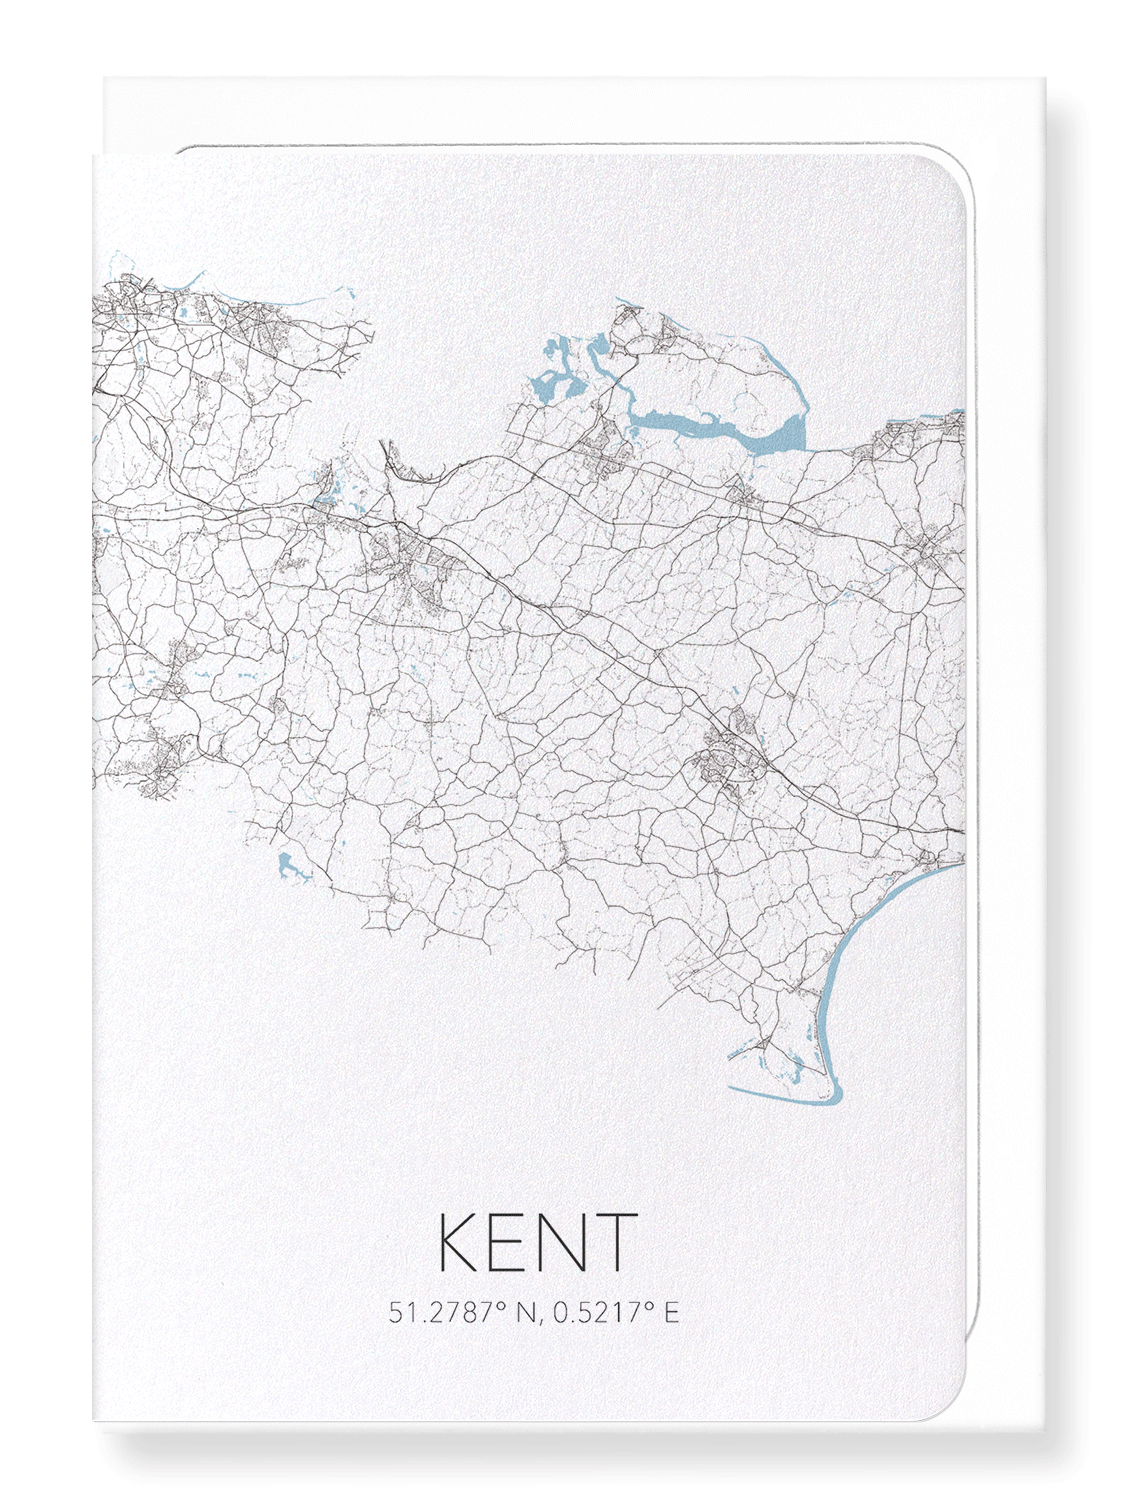 KENT CUTOUT: Map Cutout Greeting Card